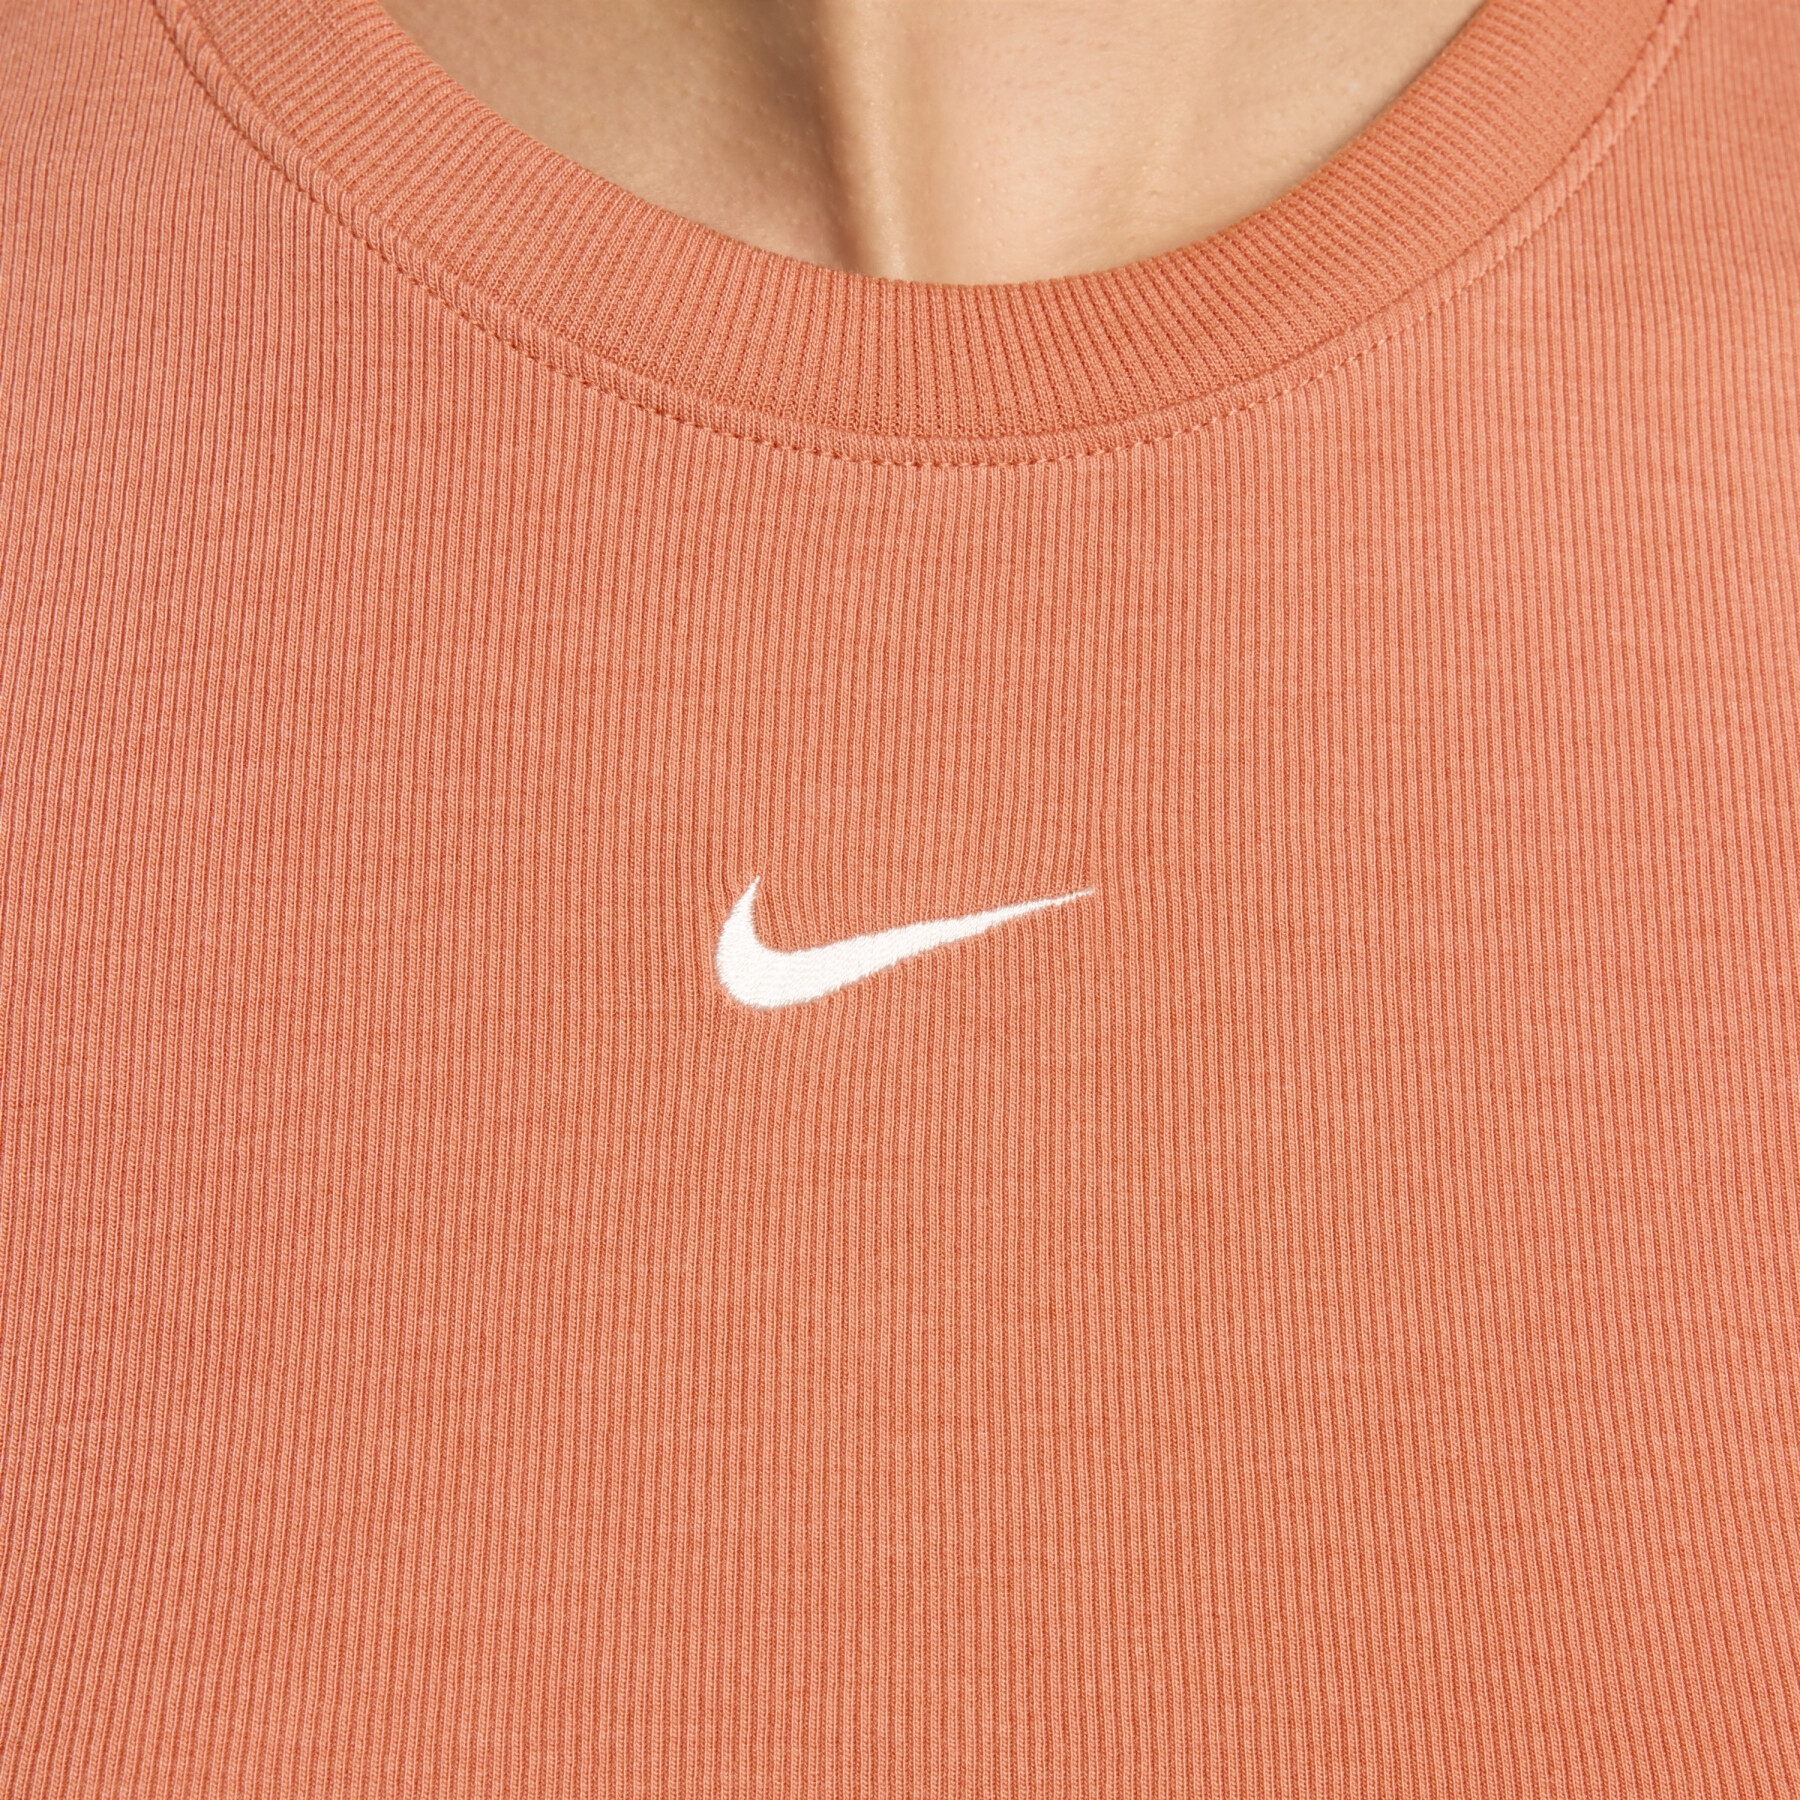 Top de mujer Nike Essential